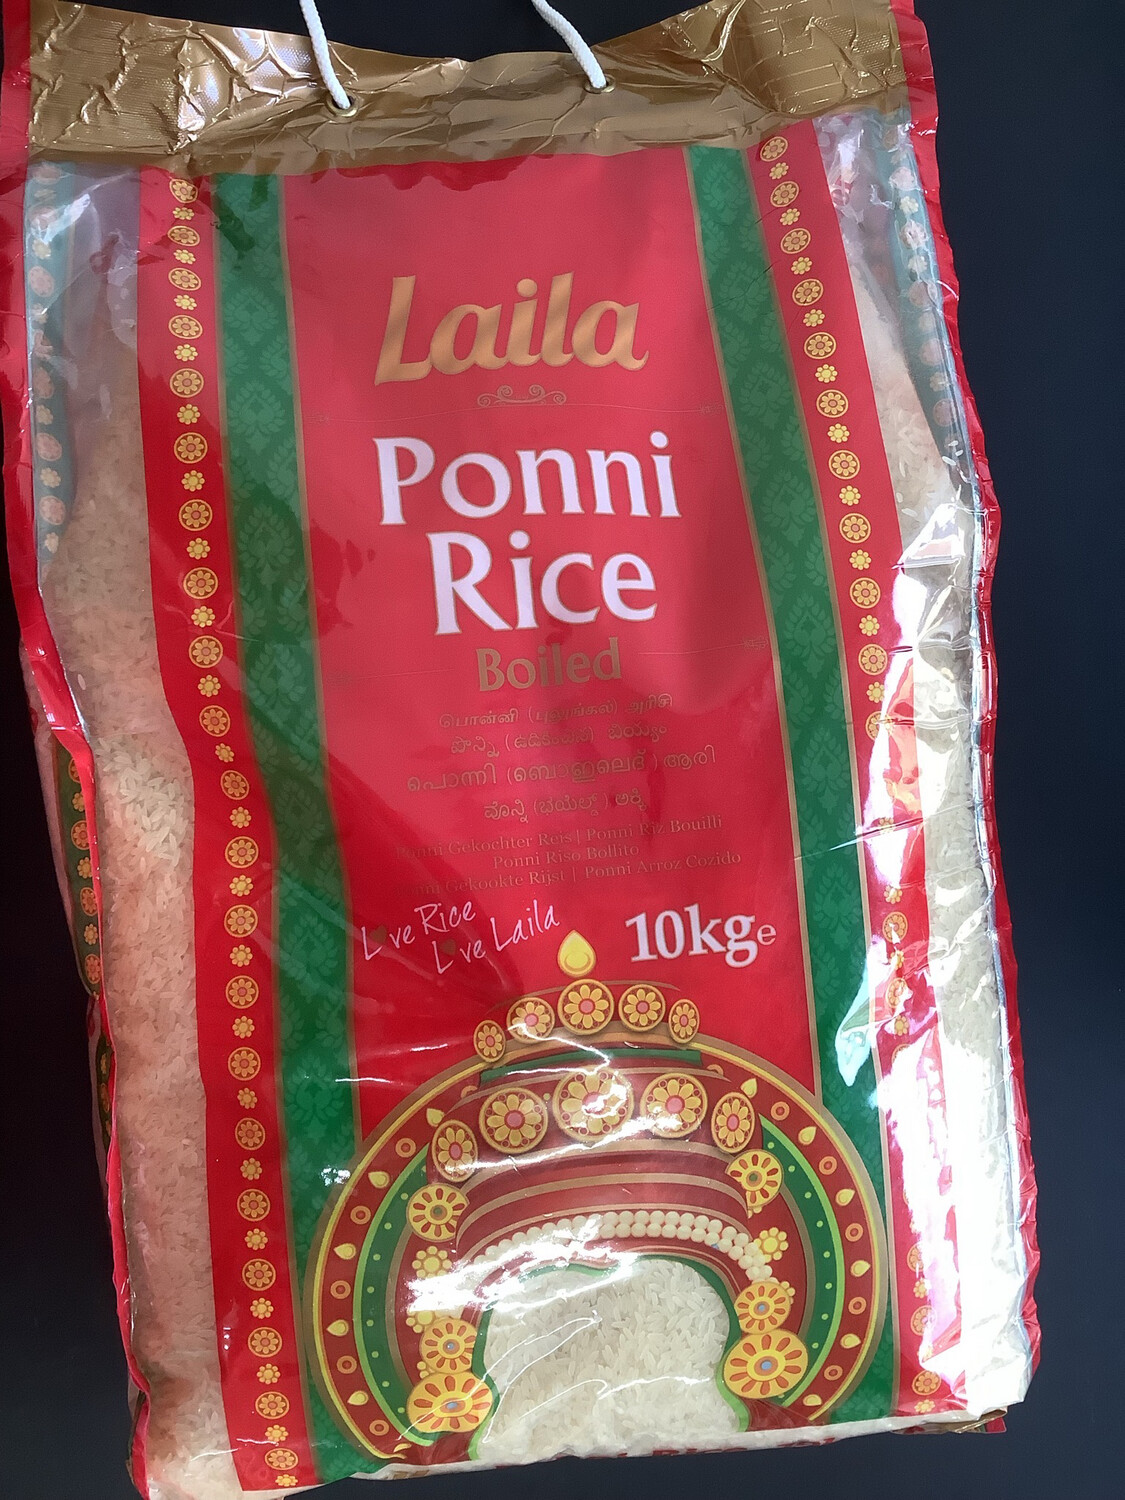 Laila Ponni Rice Boiled 10kg